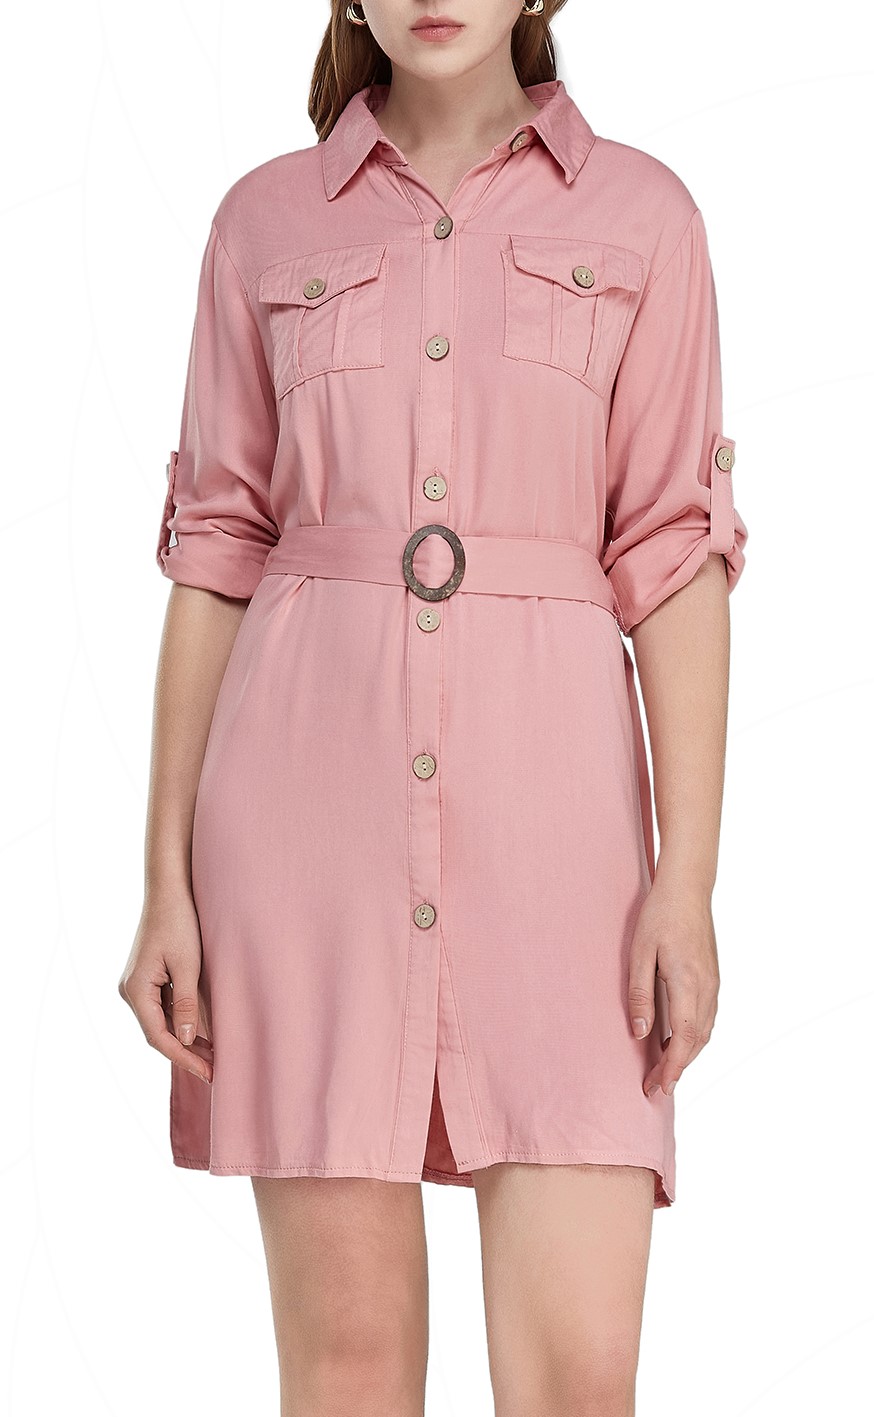 MECALA Women 3/4 Long Sleeve Button Down Shirt Dress Casual Midi Dress Pink L - image 1 of 10